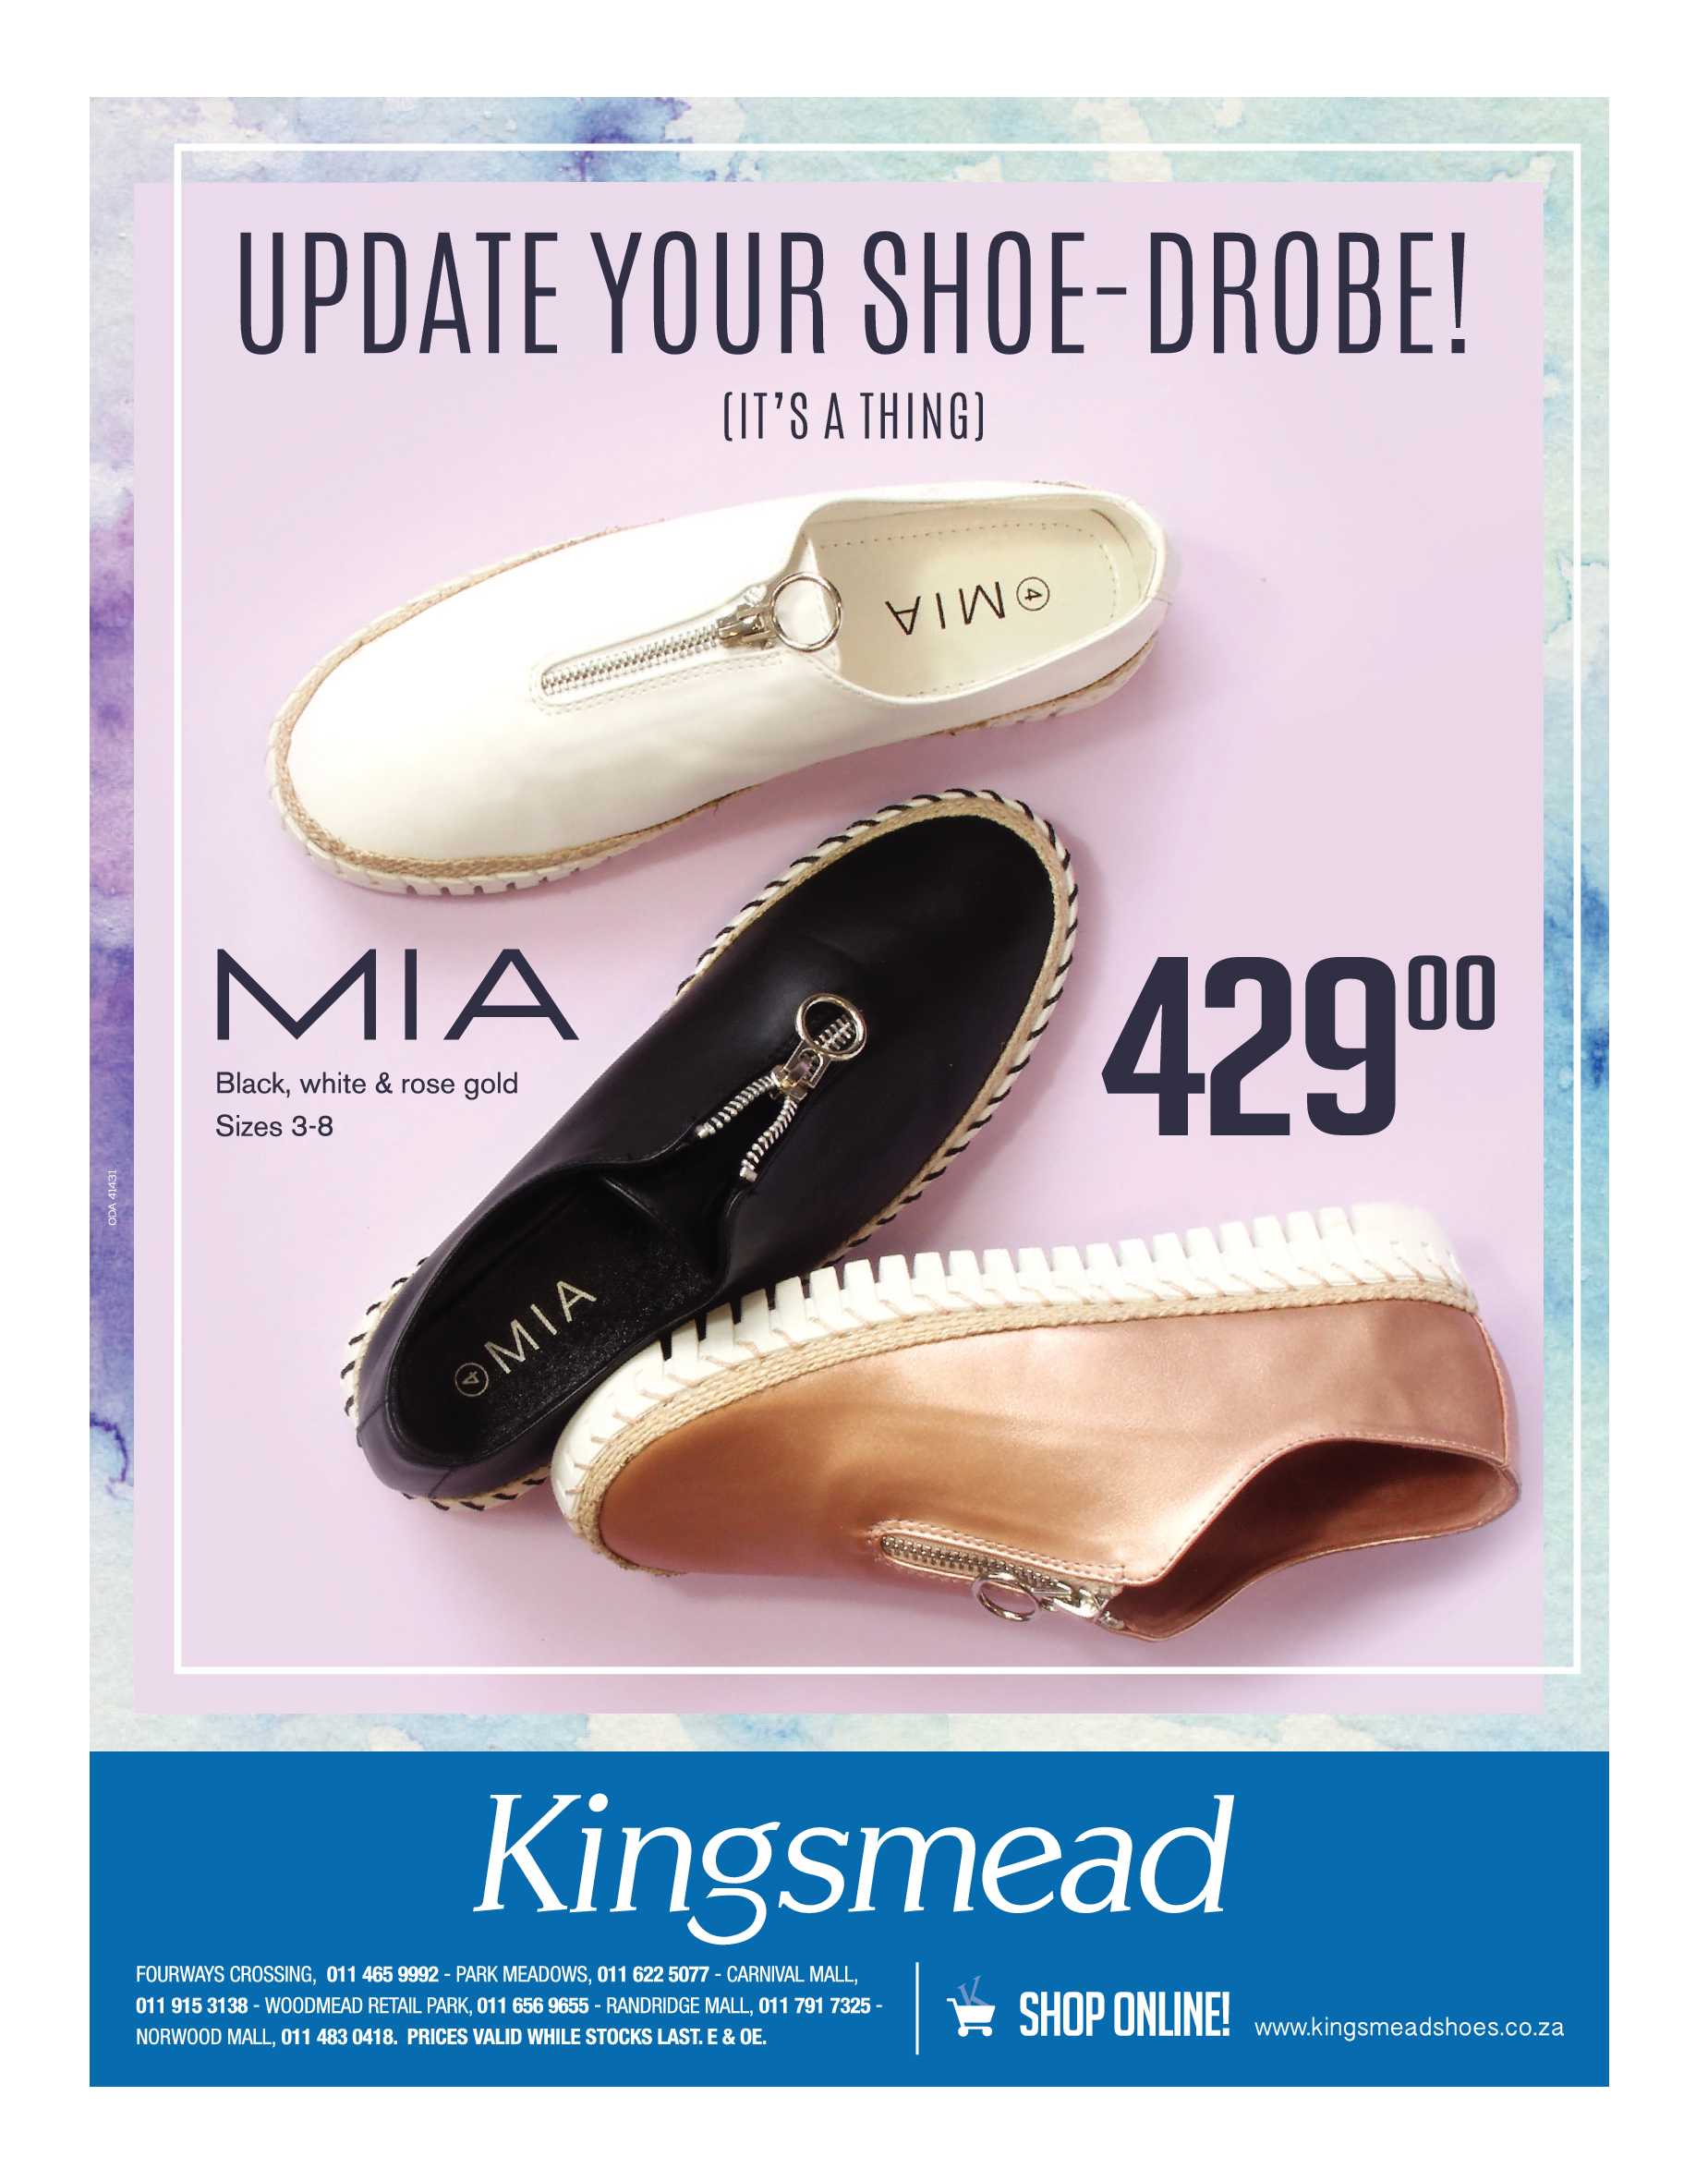 kingsmead shoes carnival mall